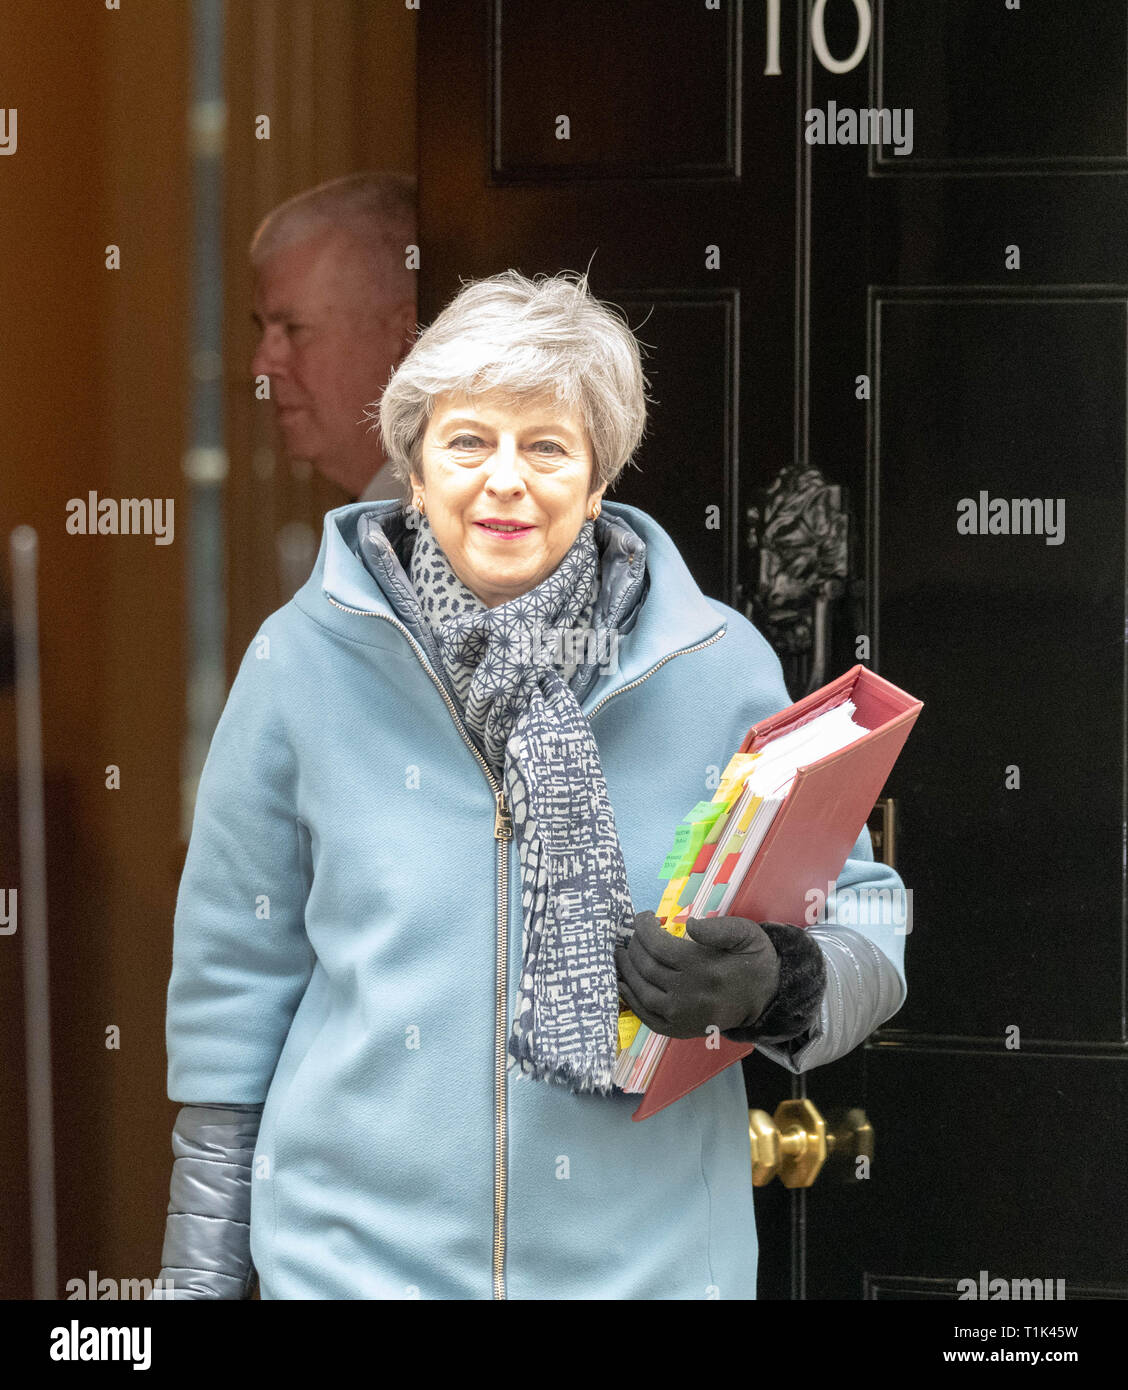 London, Großbritannien. 27. Mär 2019. Theresa May MP PC, Premierminister Blätter 10 Downing Street, London Quelle: Ian Davidson/Alamy leben Nachrichten Stockfoto